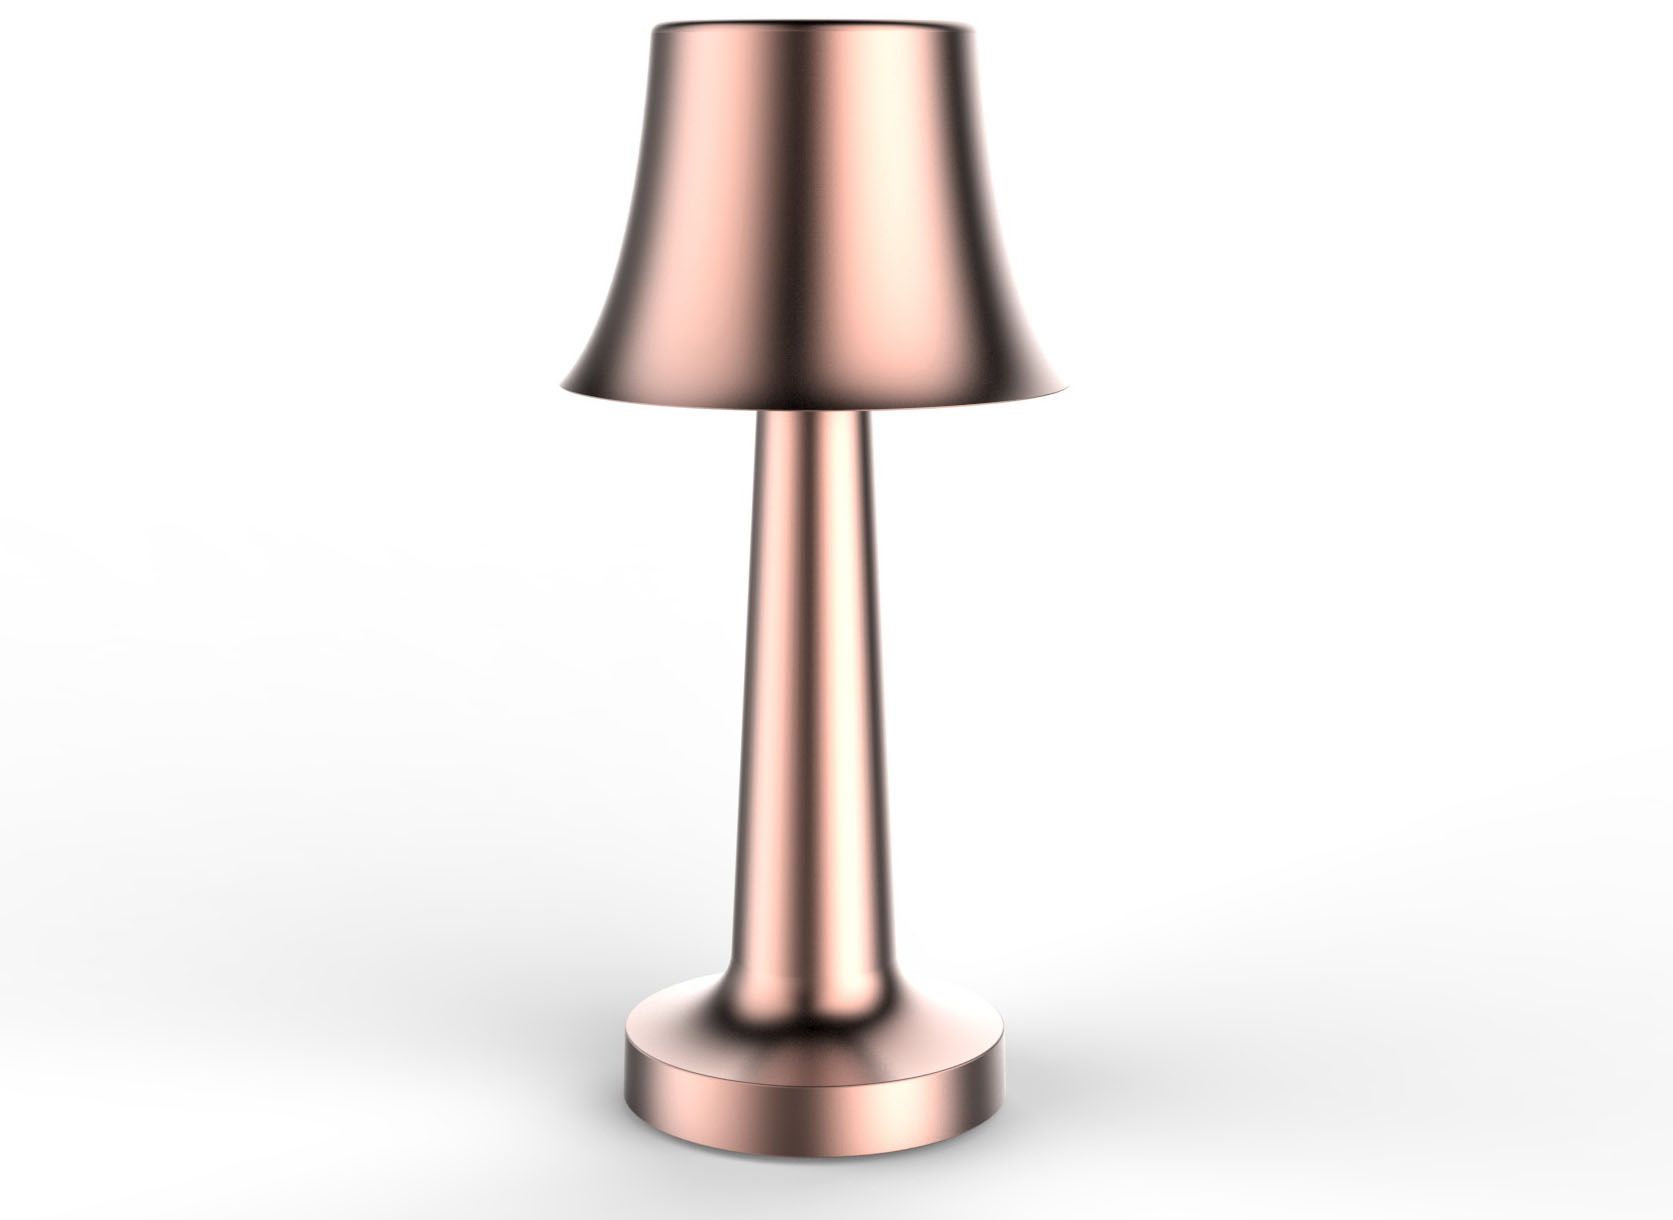 LED Retro Lamp/Copper Table Lamp for Rustic Decor